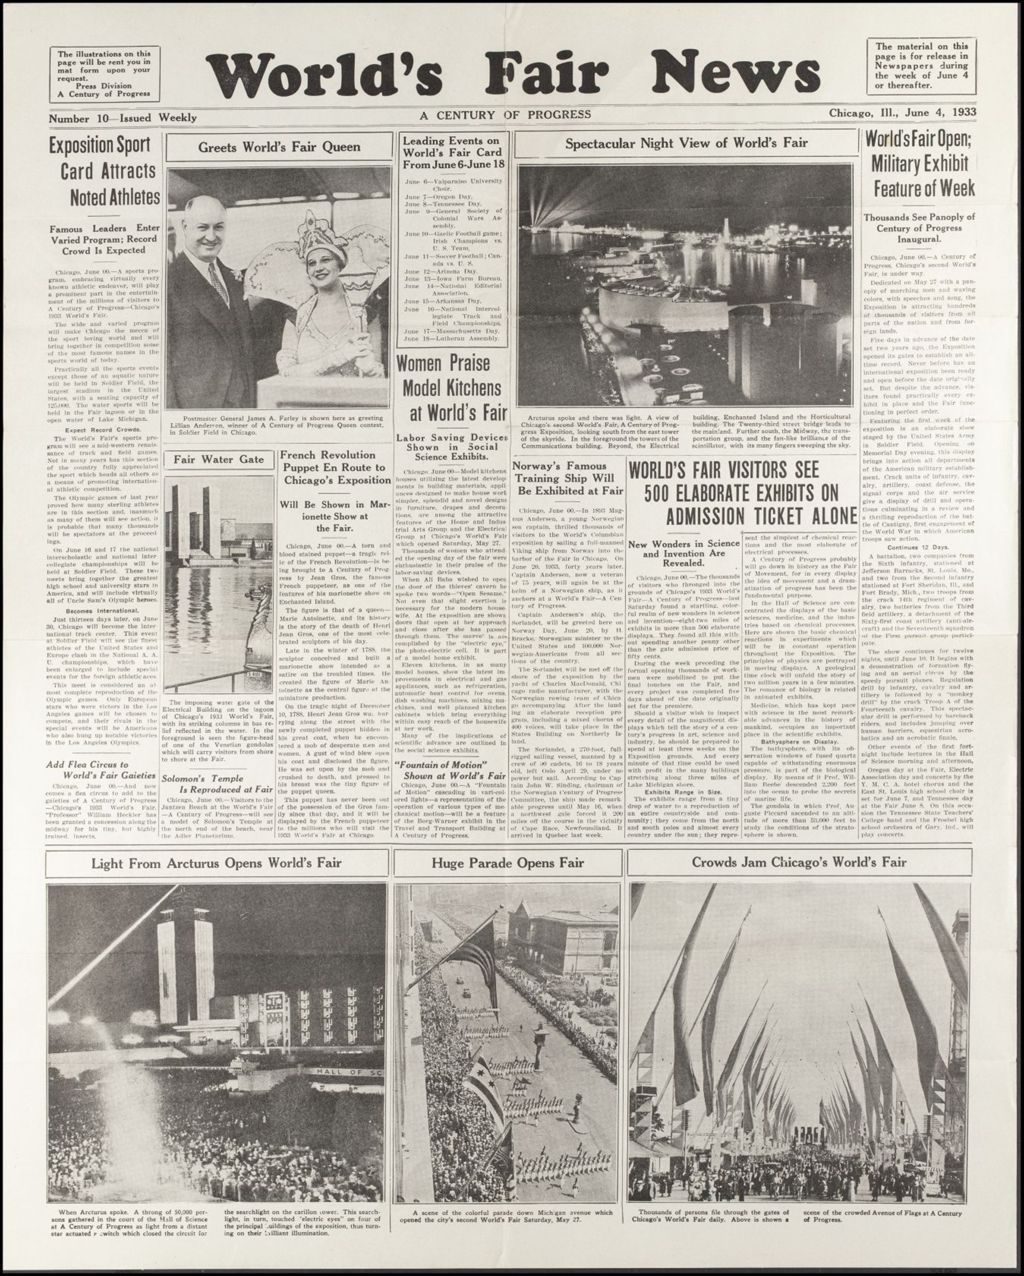 World's Fair News, June - October 1933 (Folder 14-208)